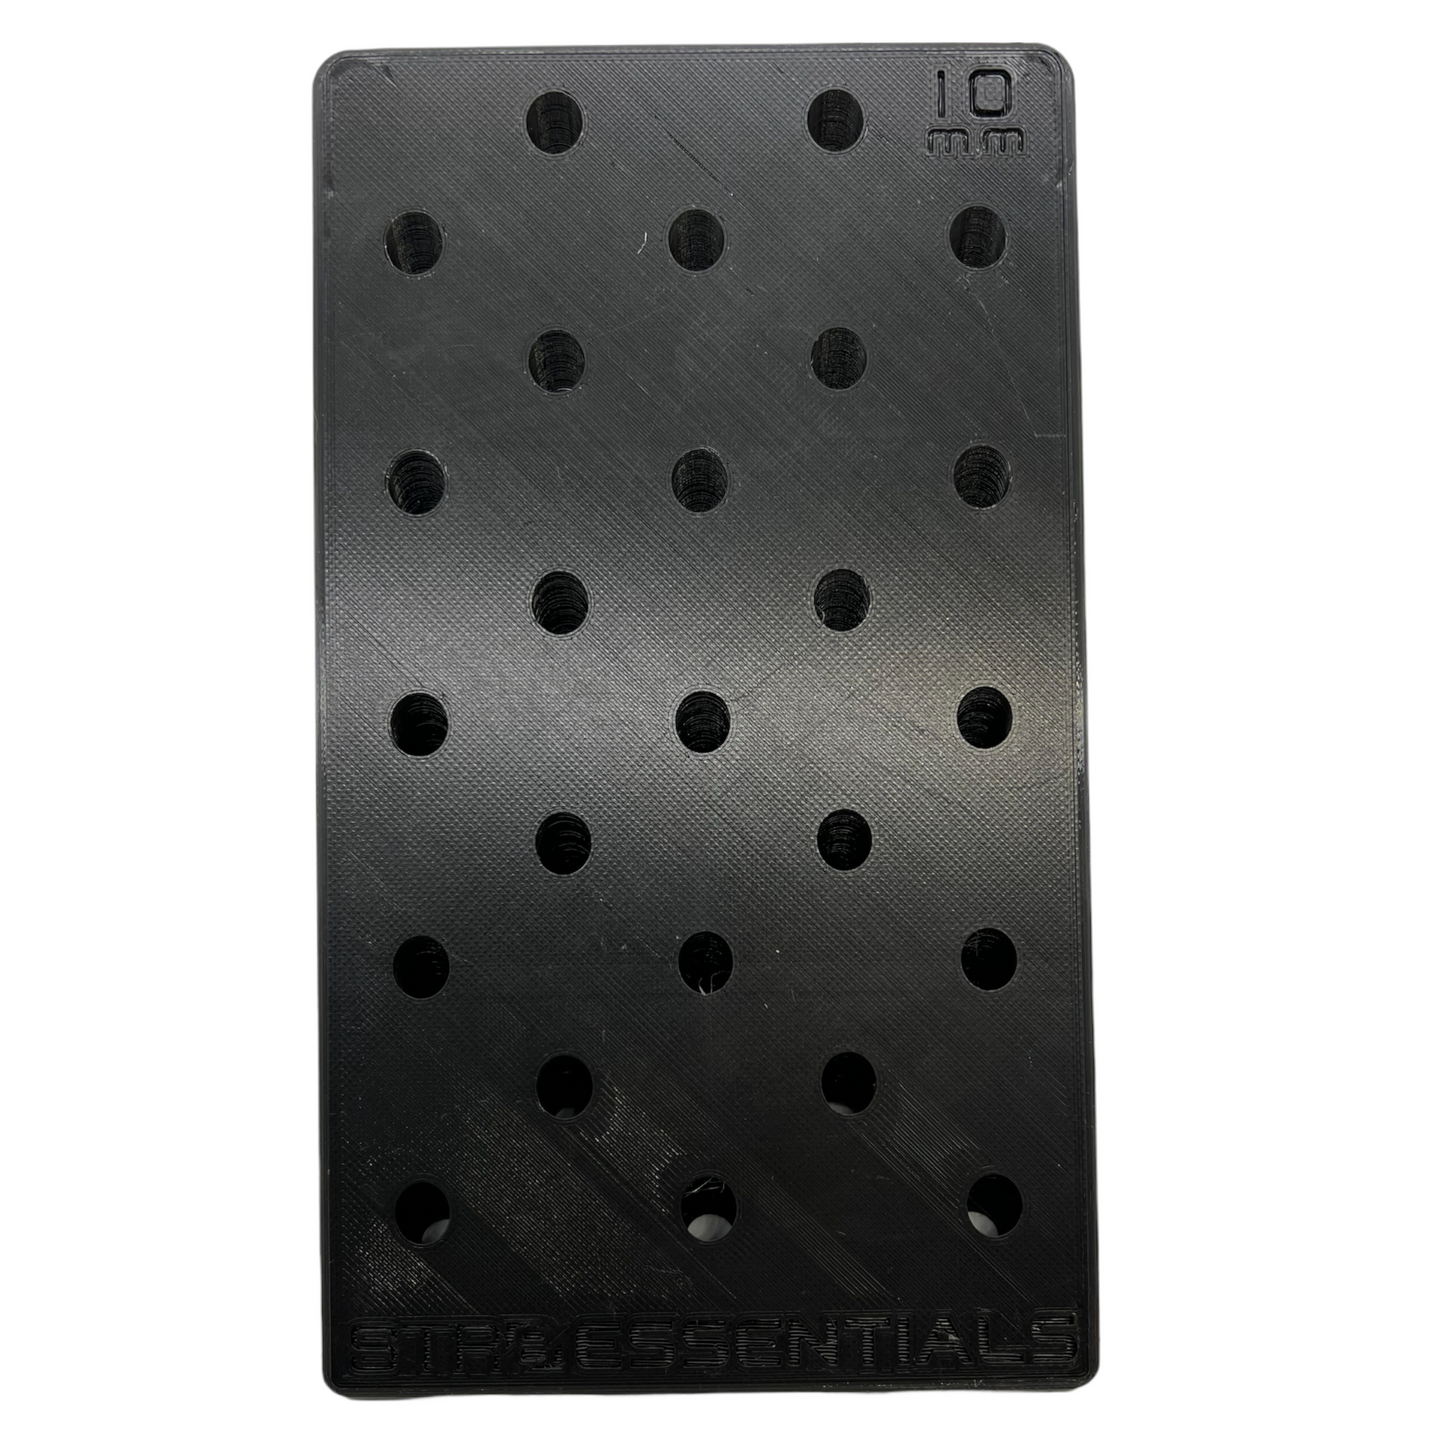 STR8 Essentials - Nail & Slide Display 10MM Onyx Black